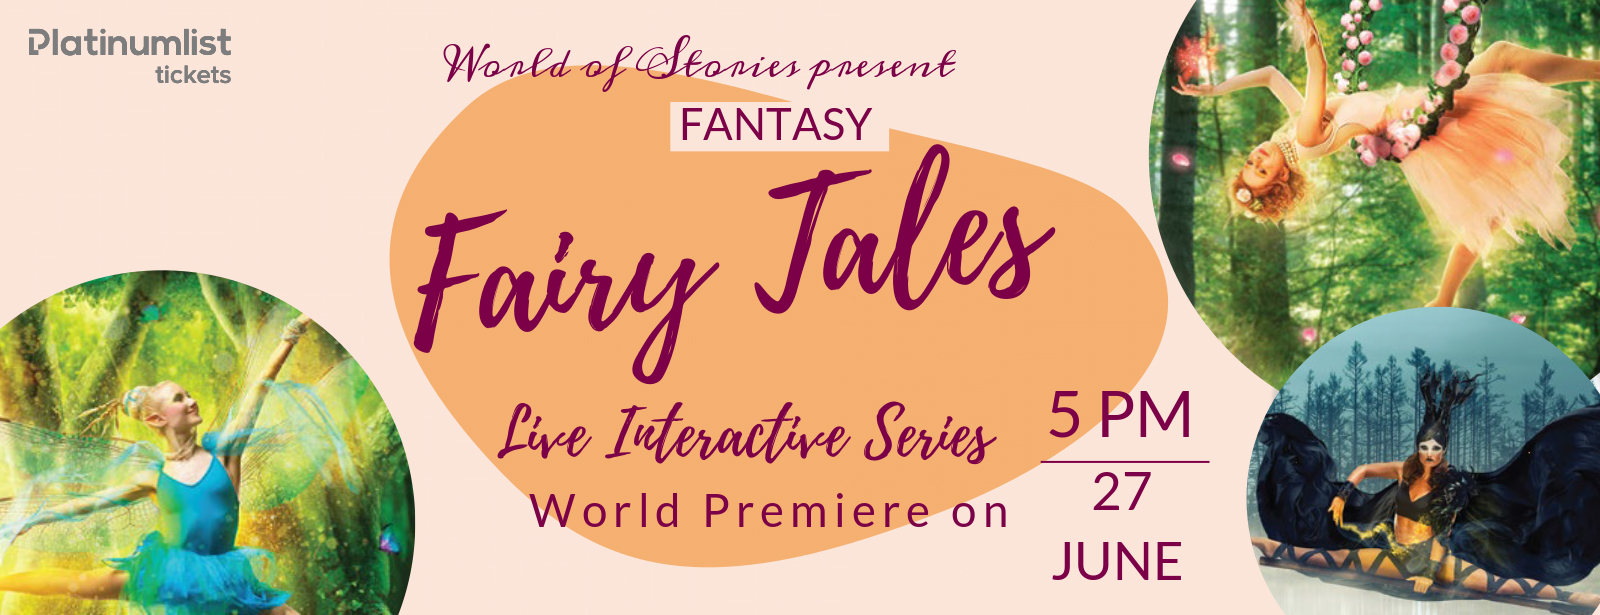 Fantasy Fairy Tales Dubai 2020